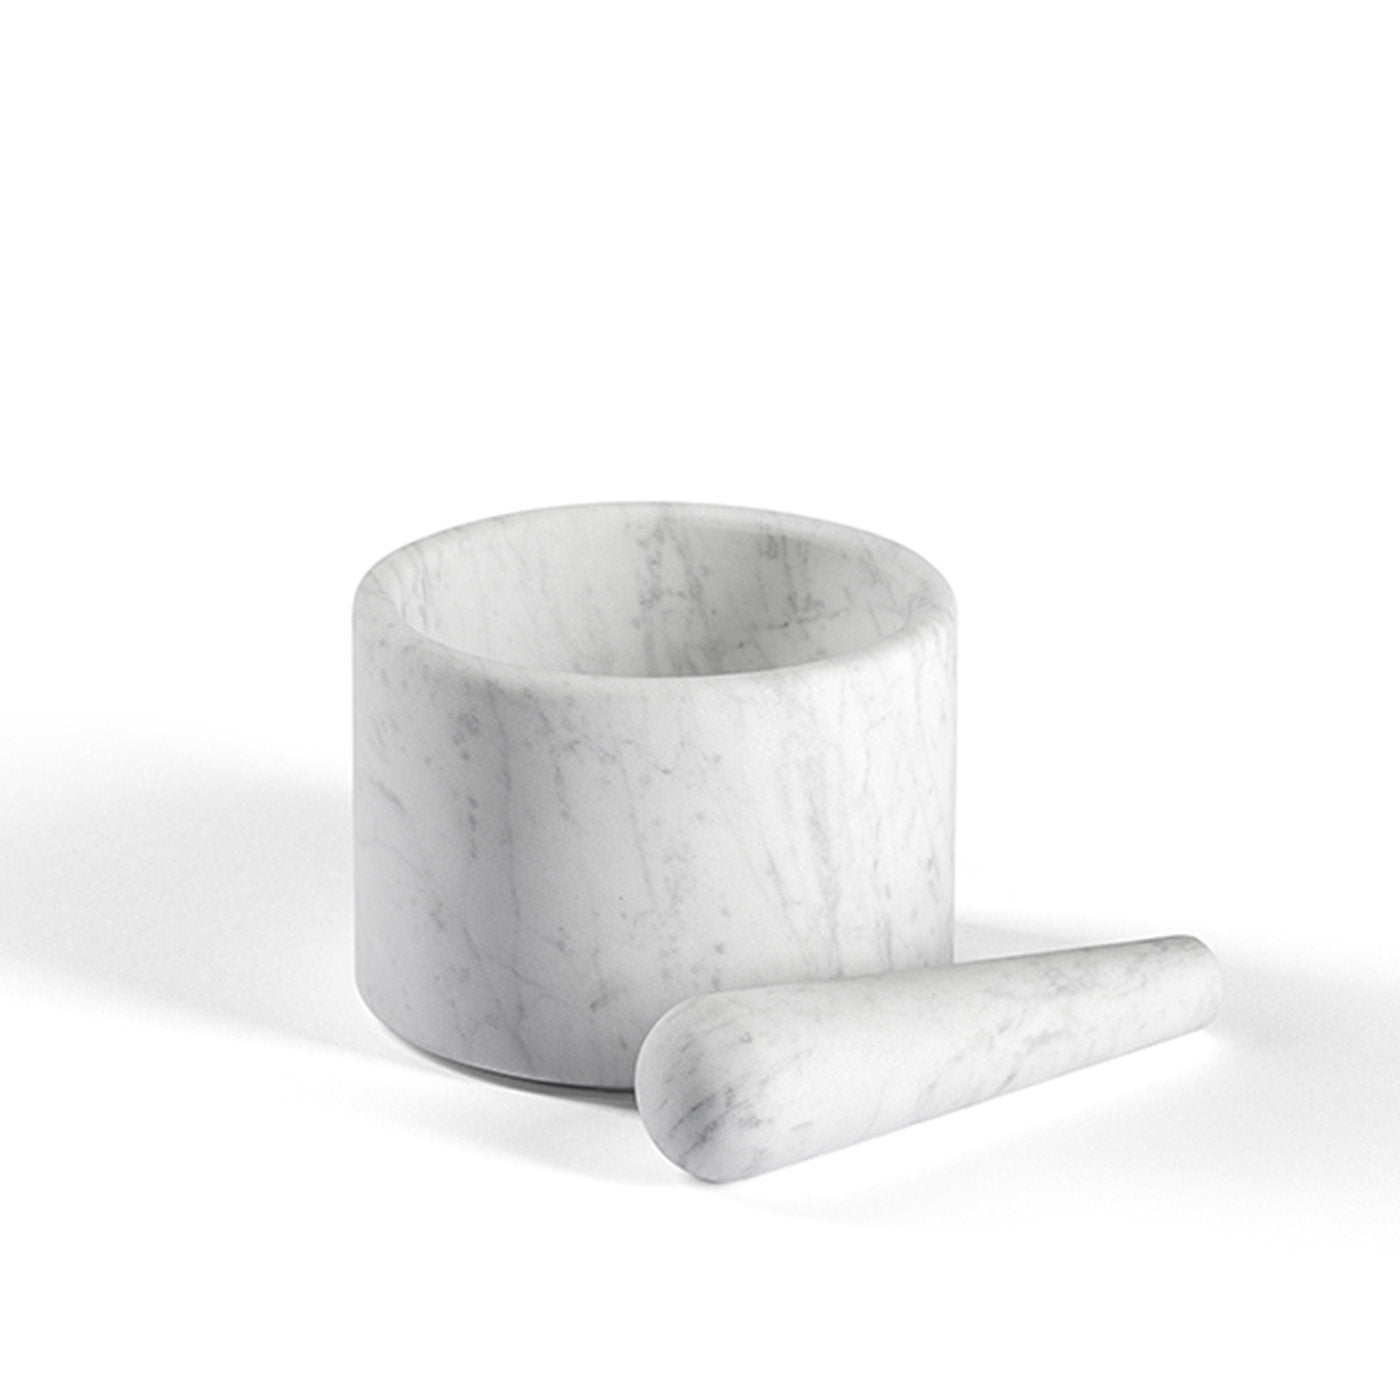 Ellipse Carrara Marble Mortar & Pestle - Alternative view 3